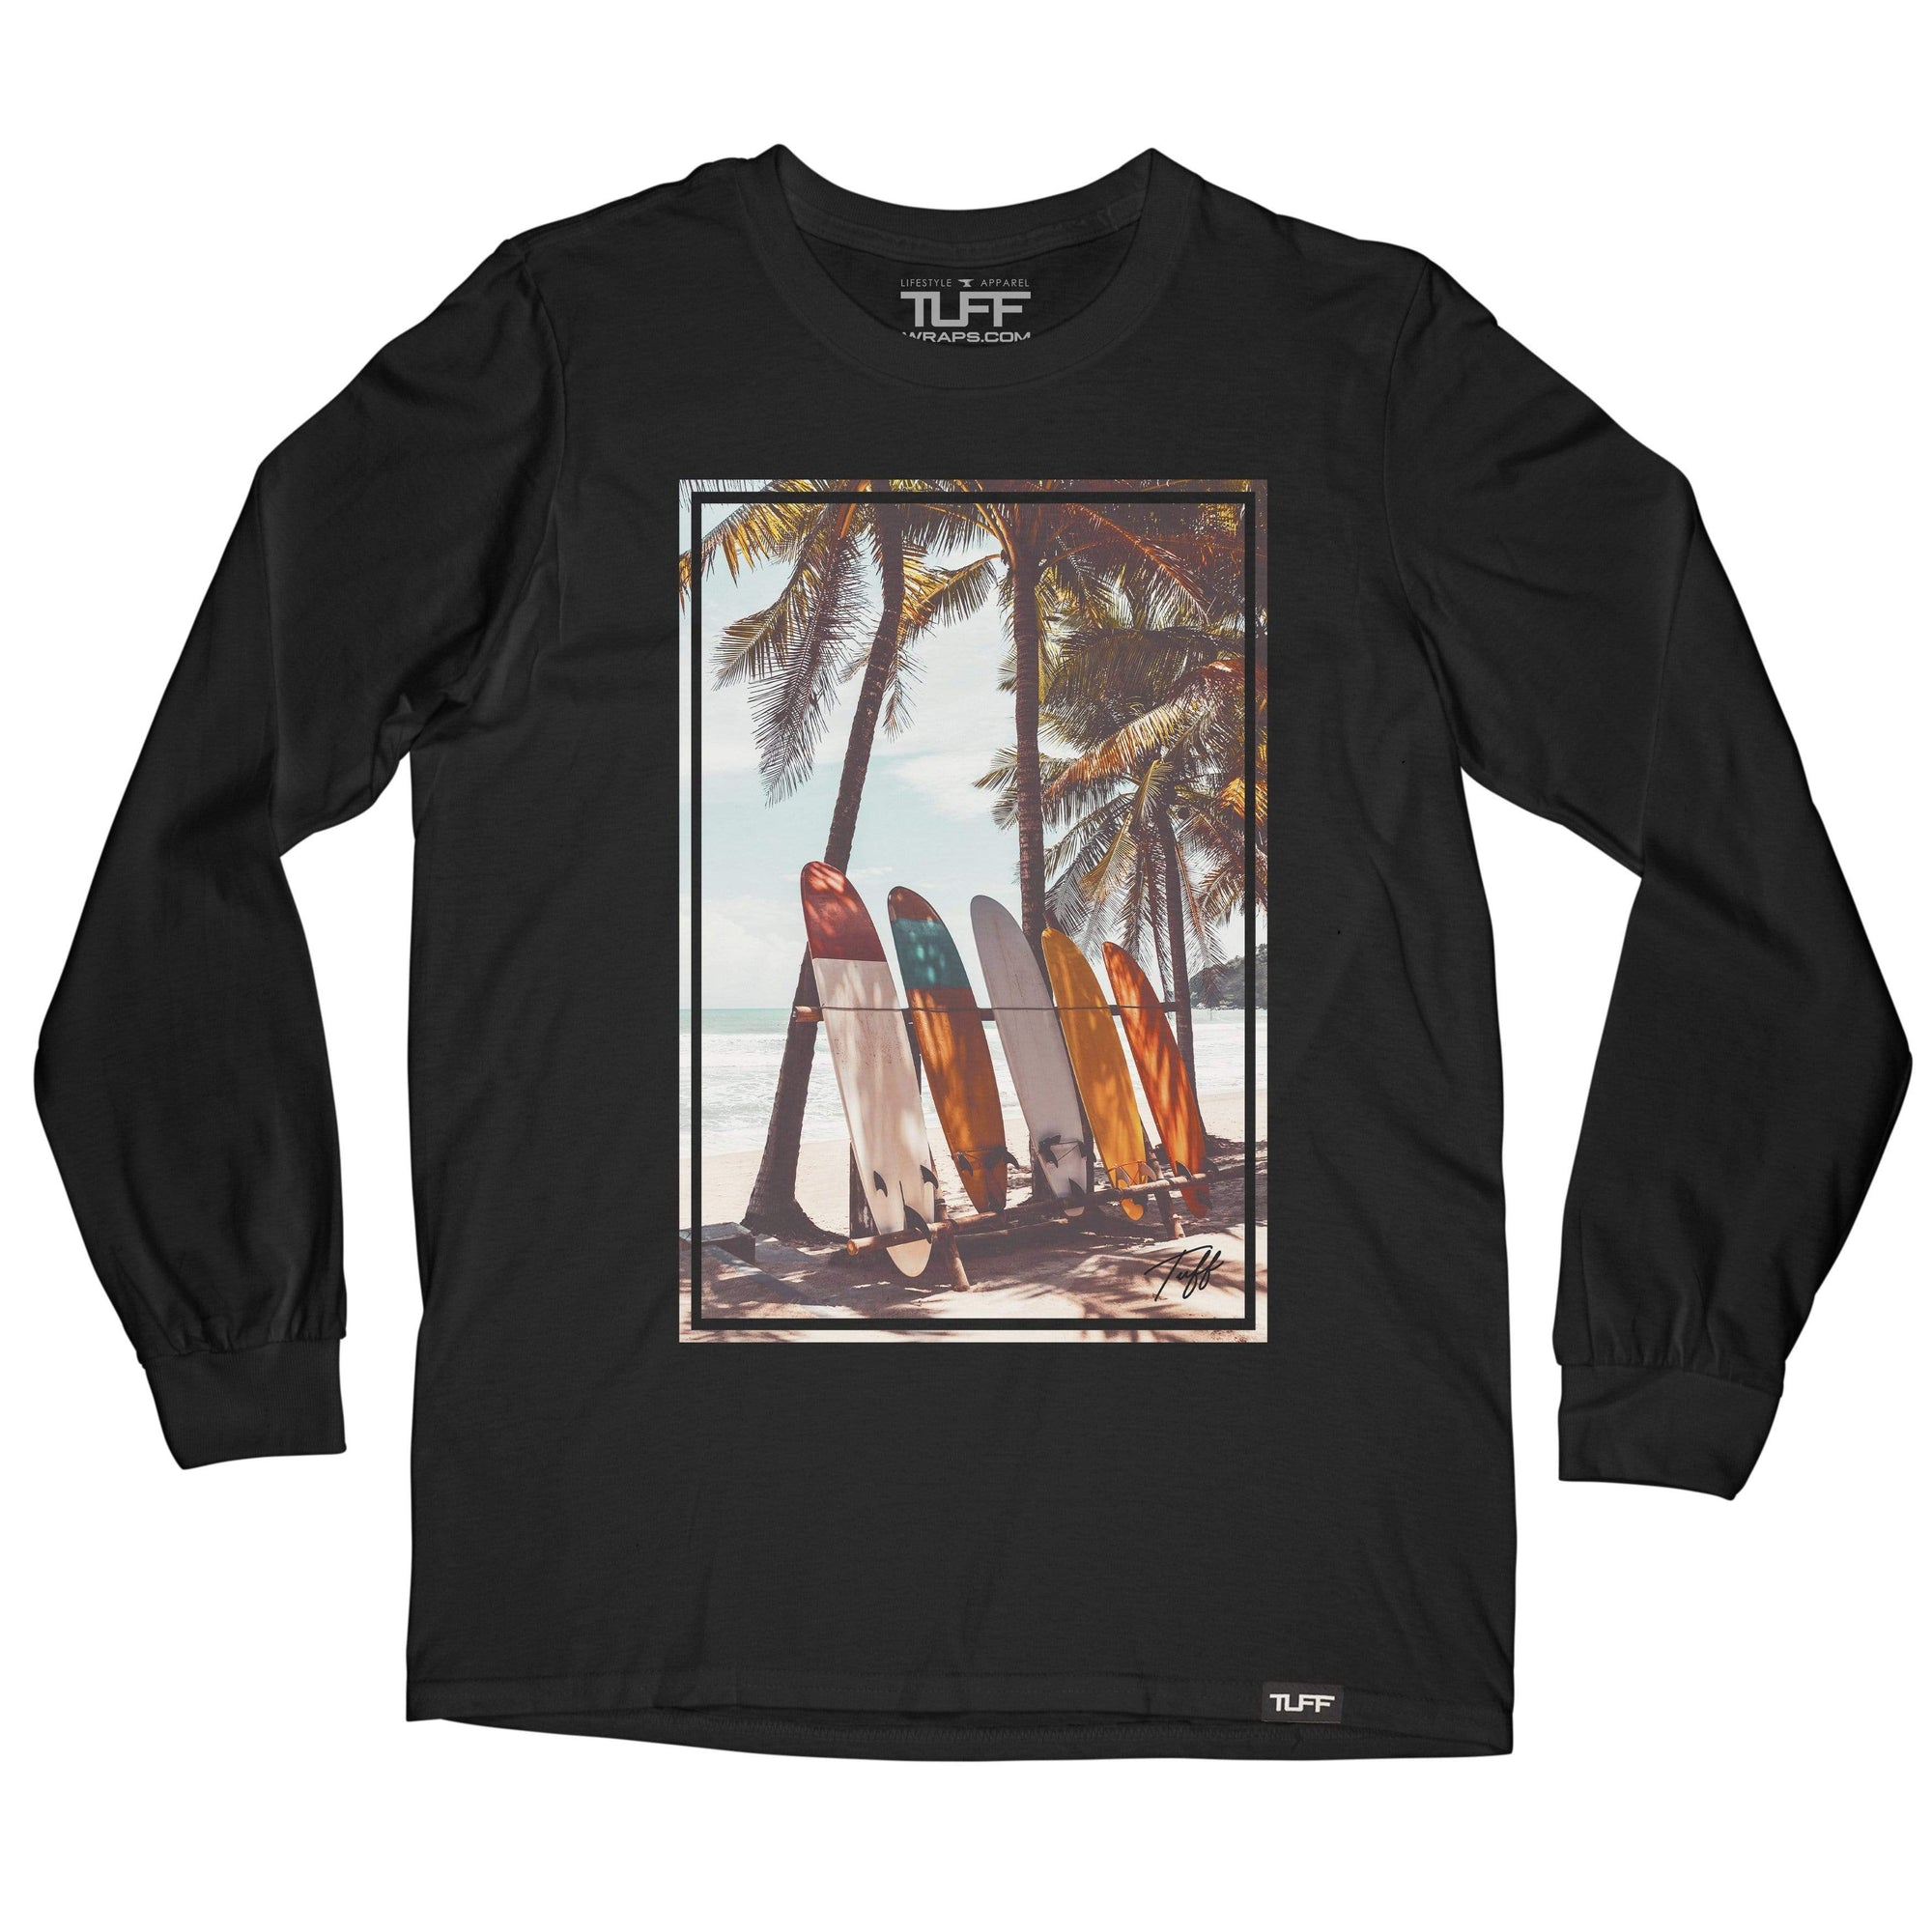 TUFF Surfboards Long Sleeve Tee Men's Long Sleeve T-Shirt